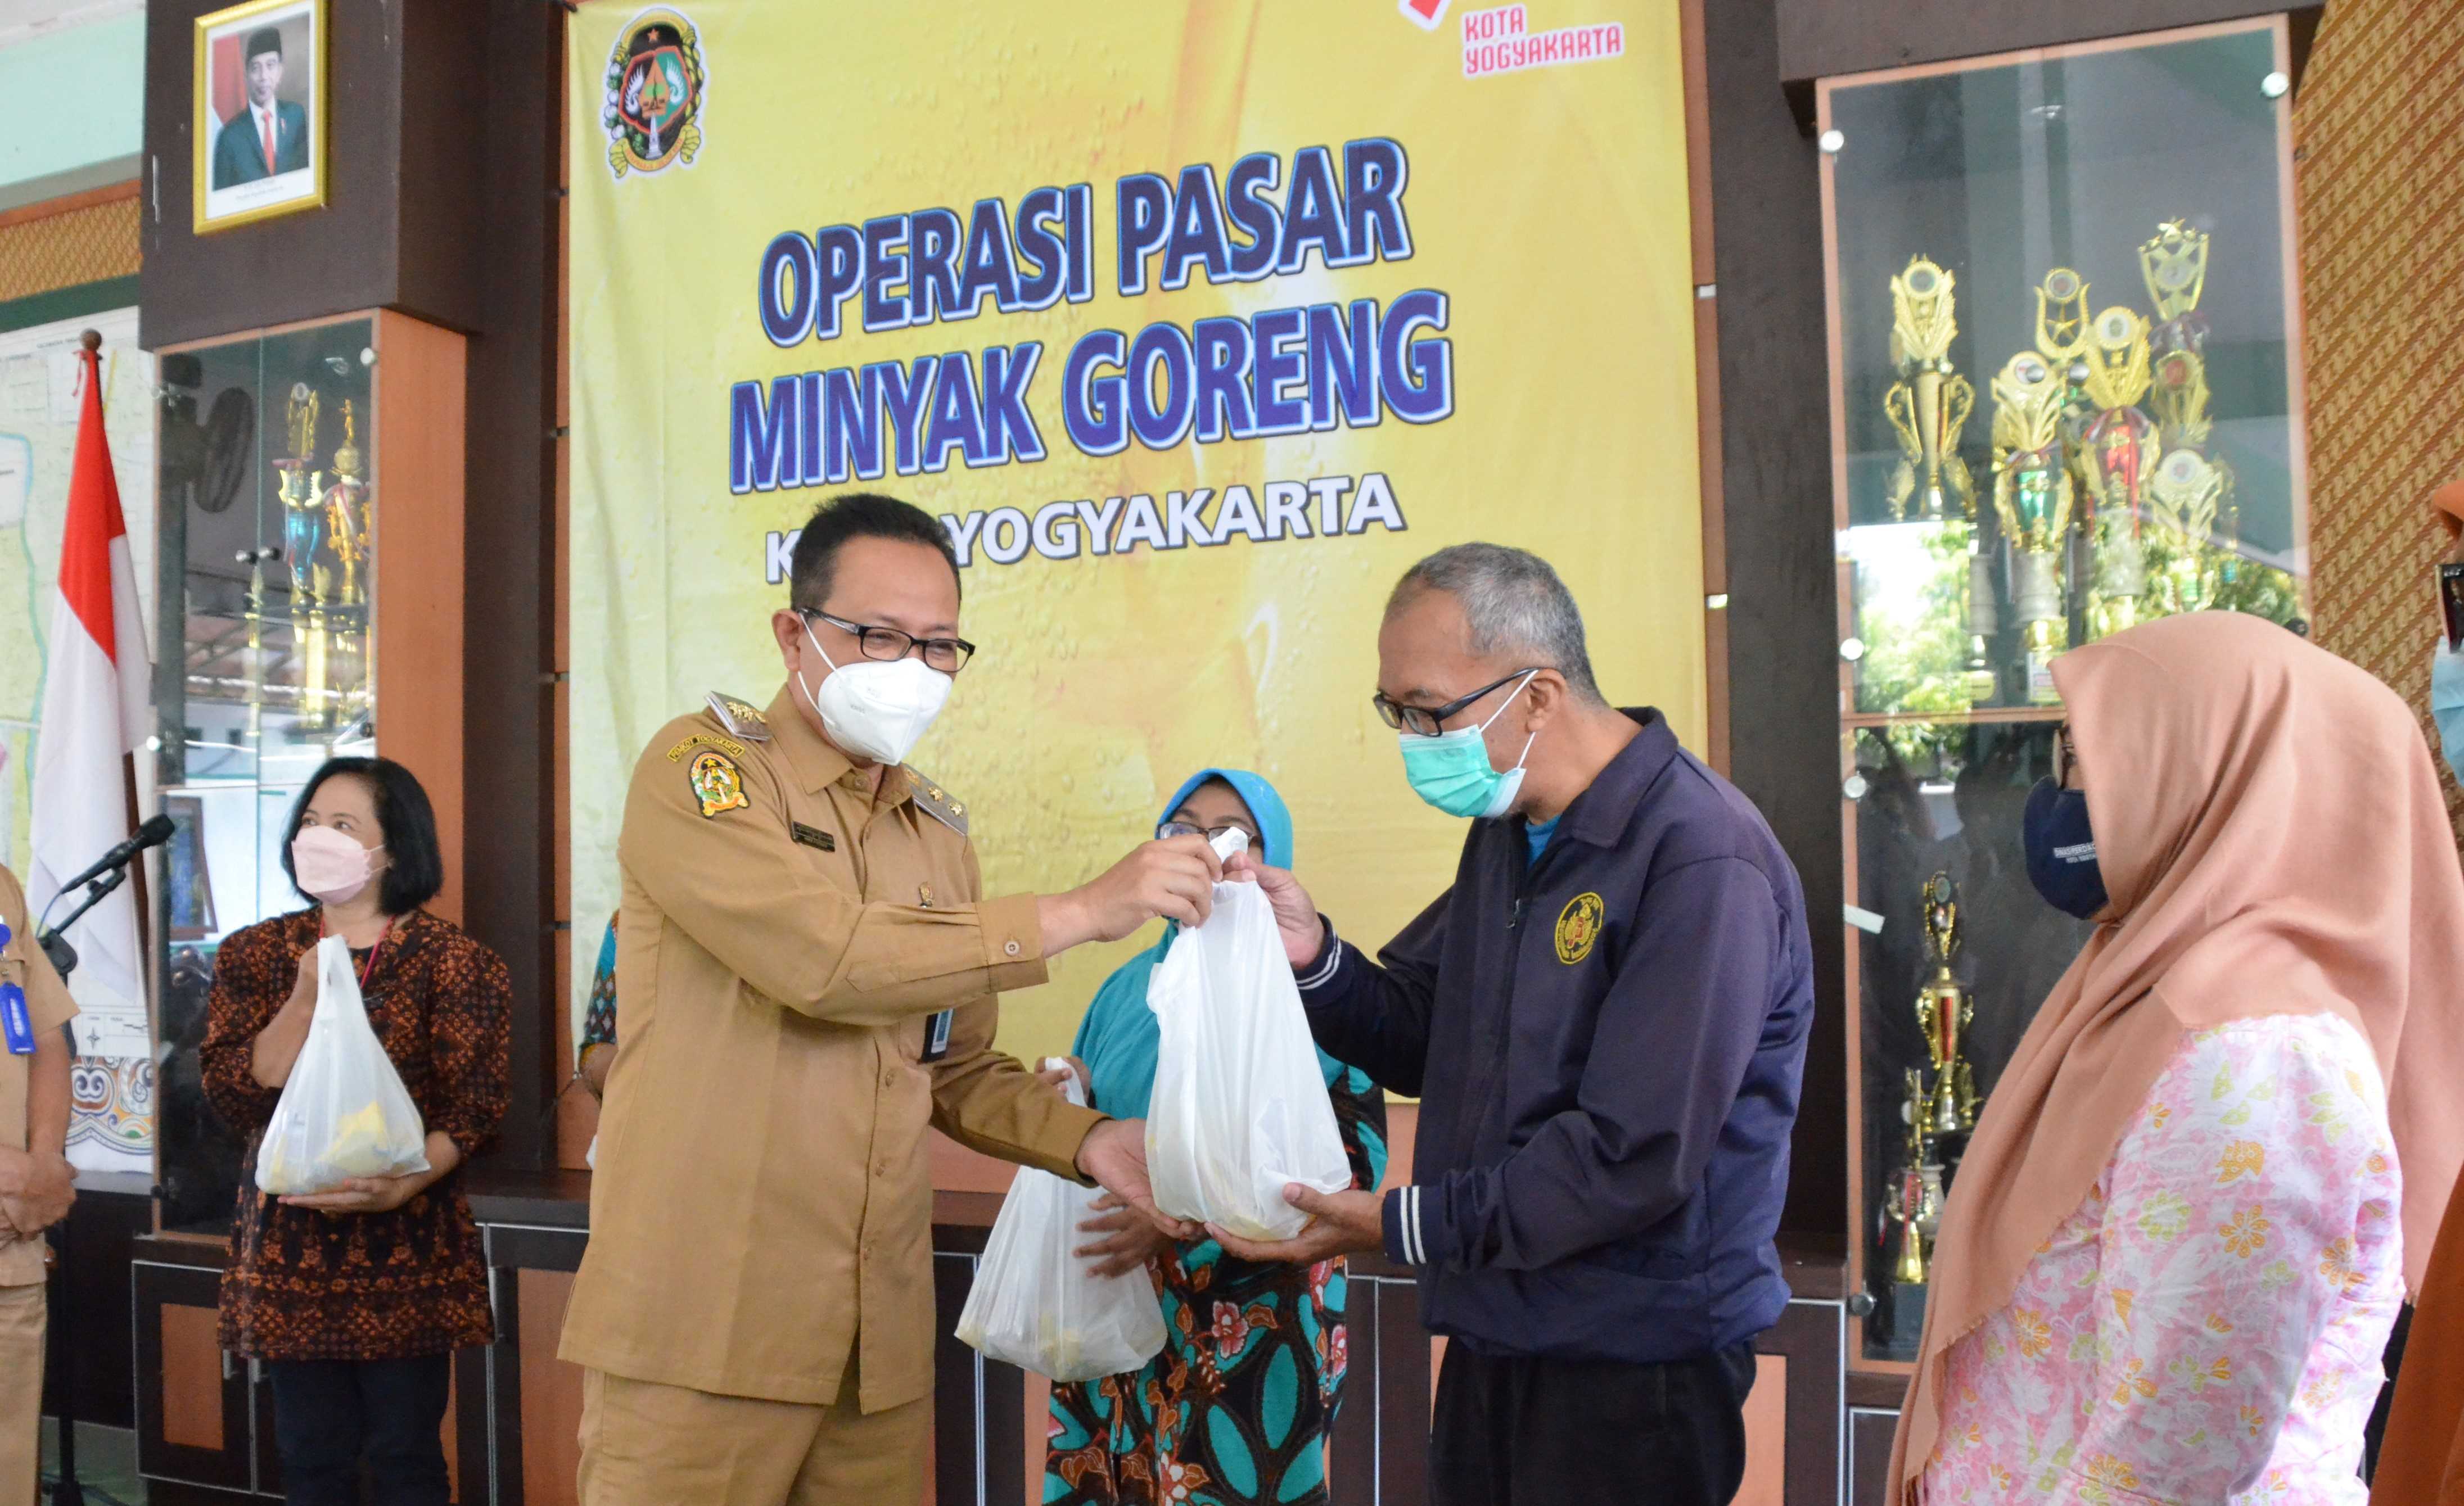 Wakil Walikota Yogyakarta Heroe Poerwadi secara simbolis menyerahkan minyak goreng kepada warga dalam operasi pasar, Senin (24/1/2022).